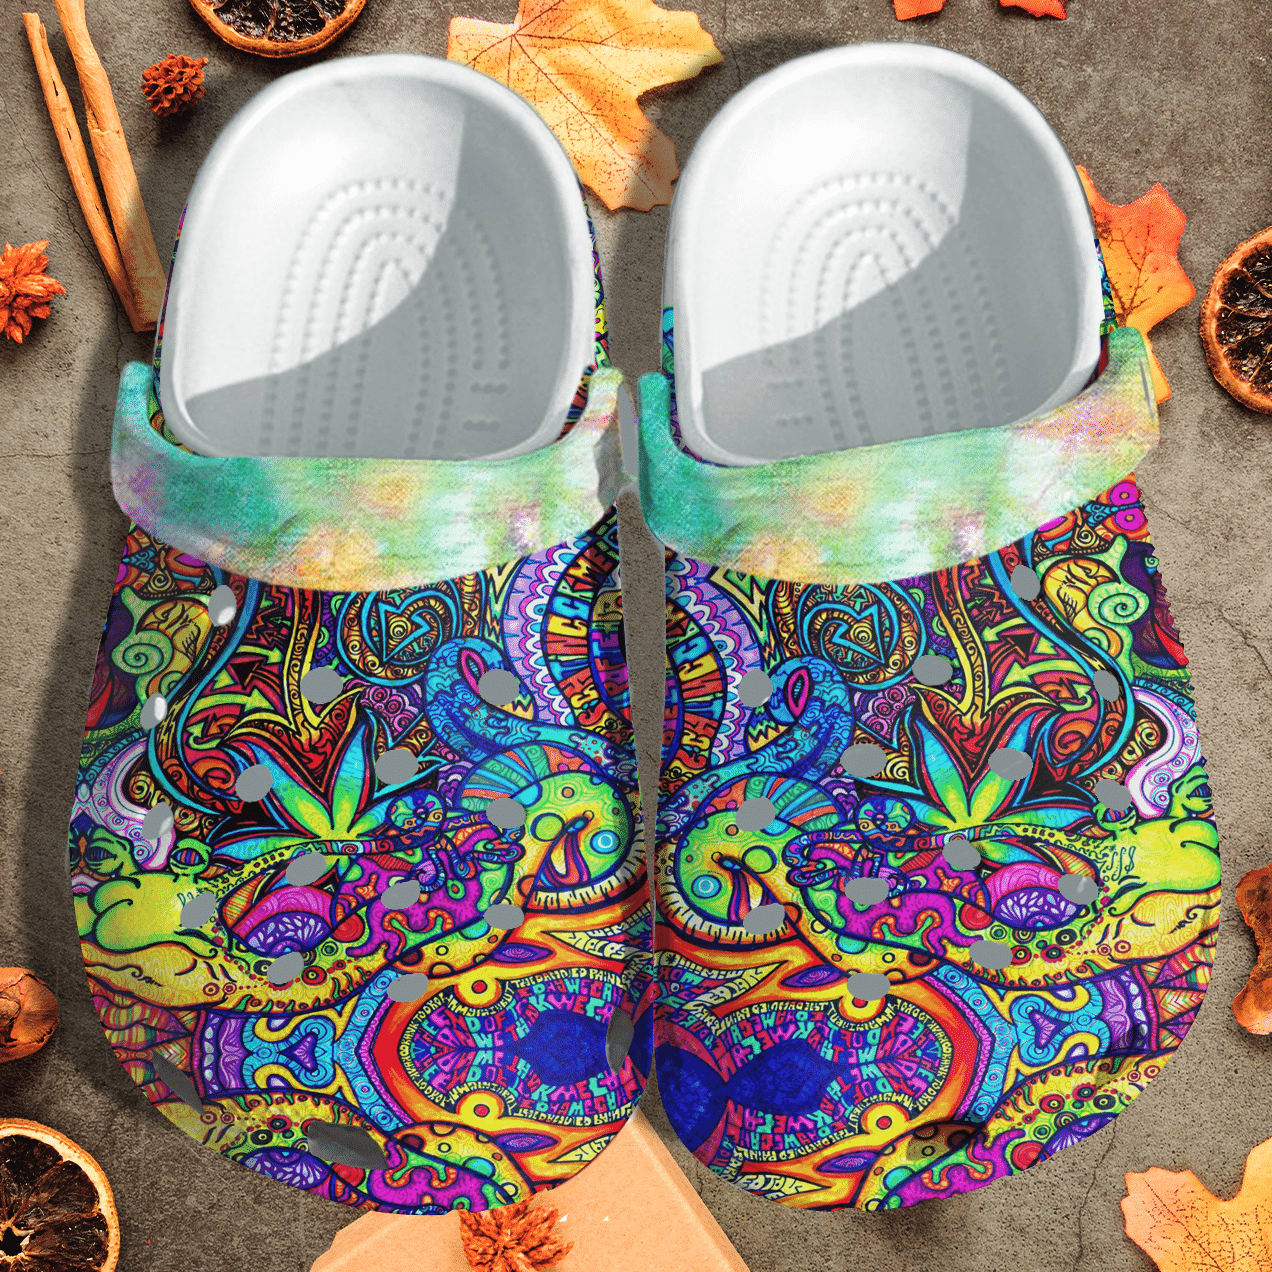 Hippie Art High Leaf Funny Peace Clog Shoess Shoes Clogs Bqscl4